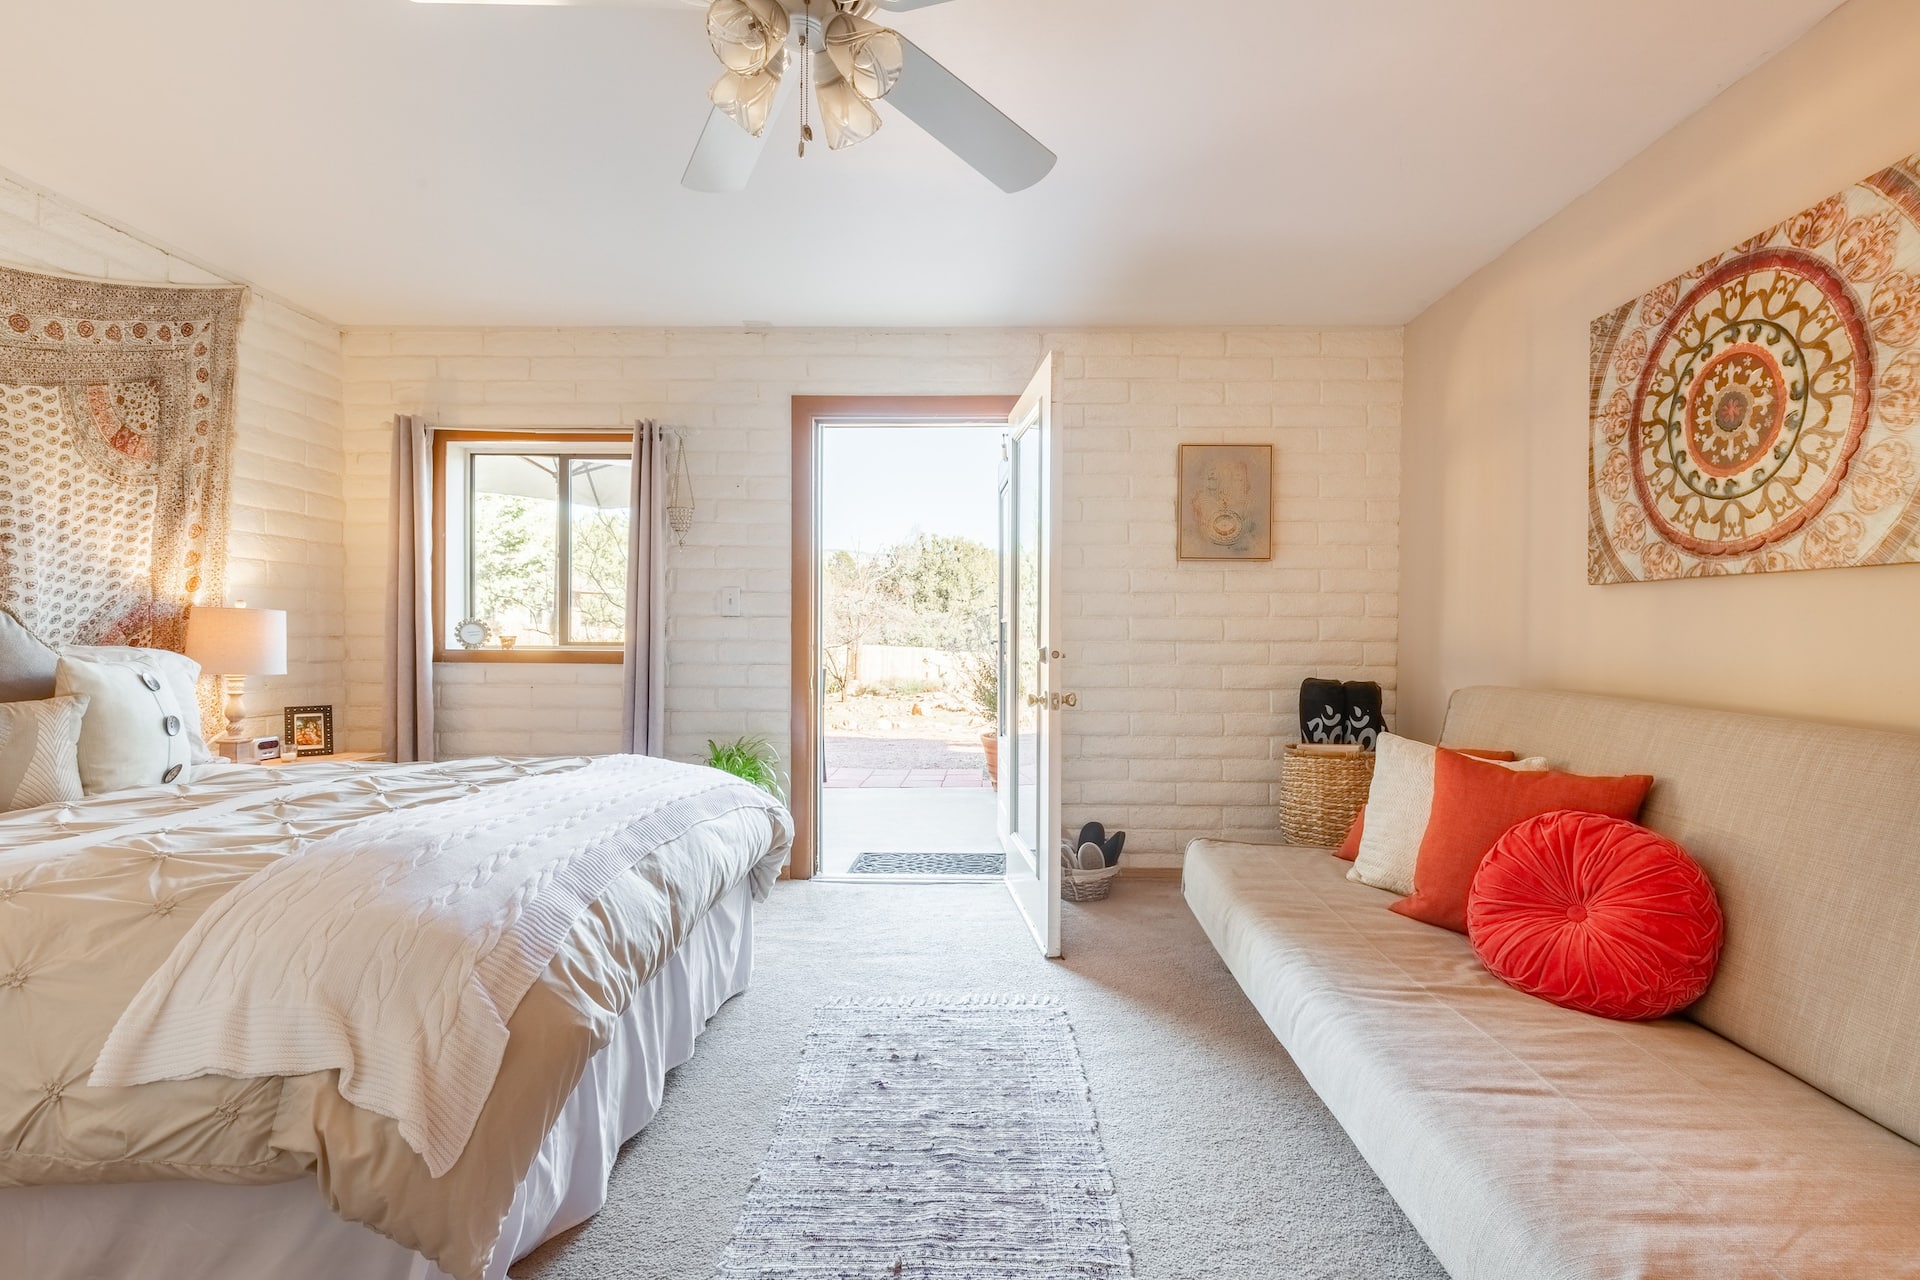 the Yoga Retreat Room Airbnb in Sedona